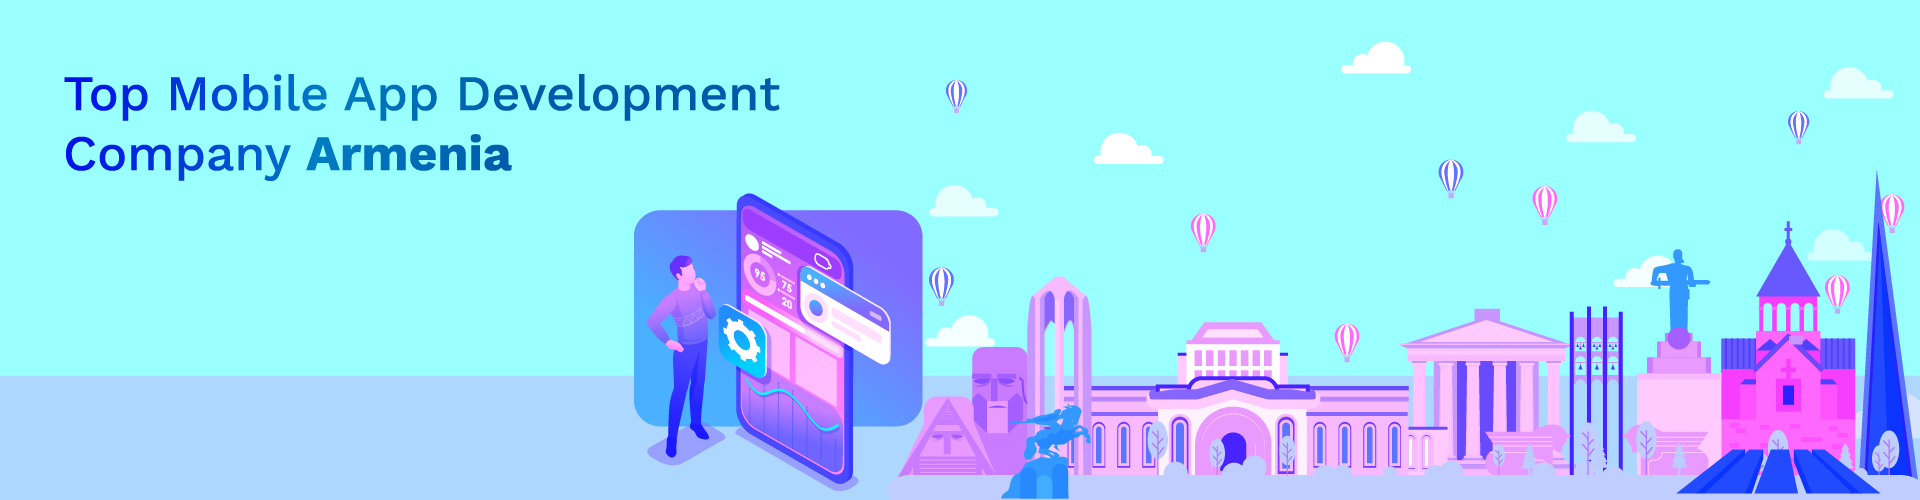 mobile app development armenia